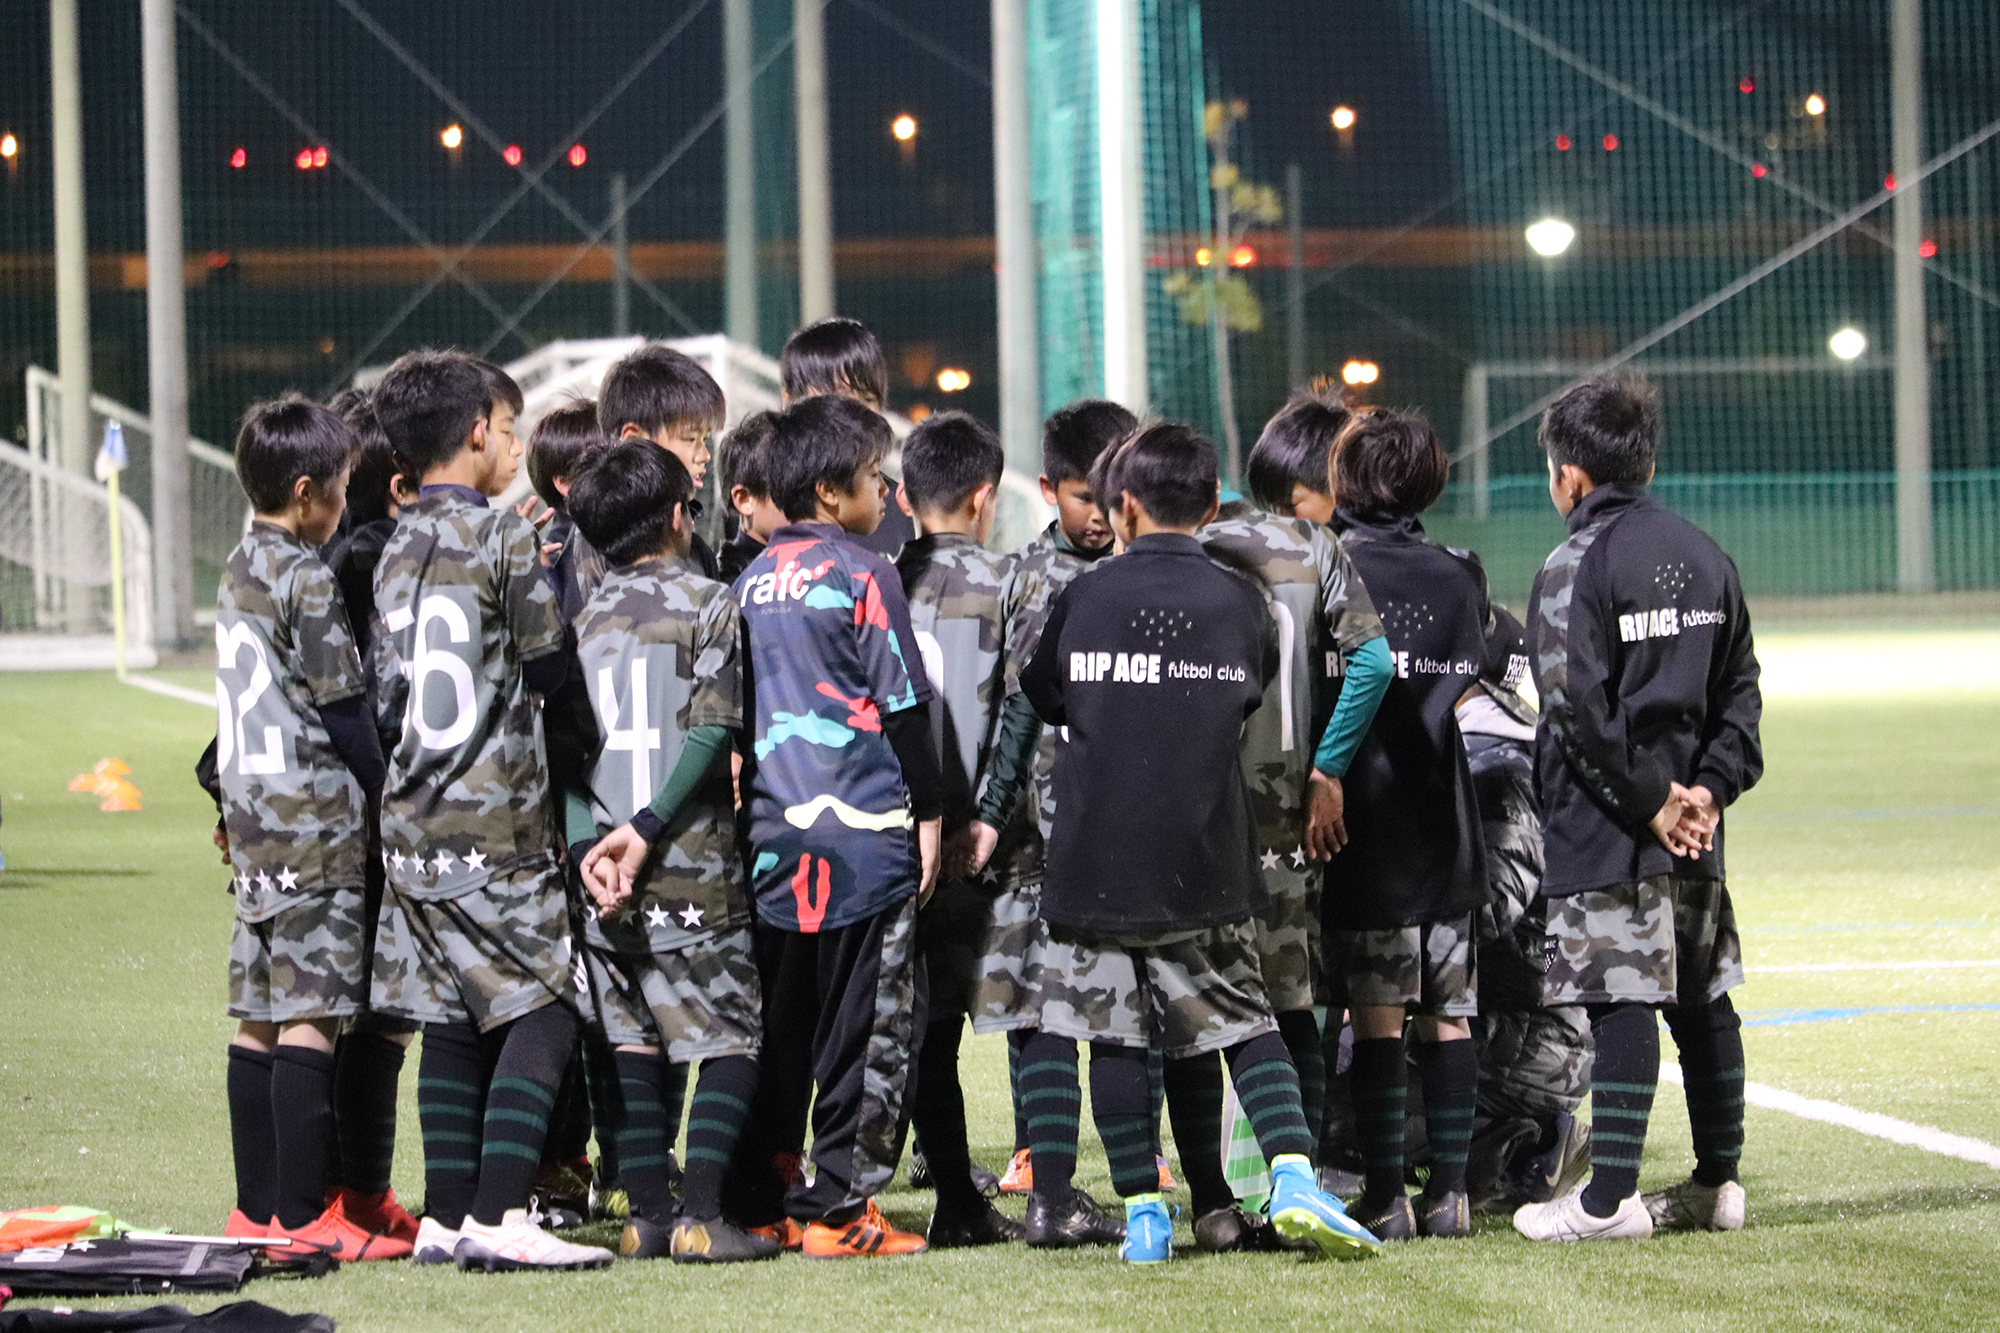 Vol 2 Rip Ace Soccer Club U 15監督 今村康太 Reibola 新しいサッカーメディア